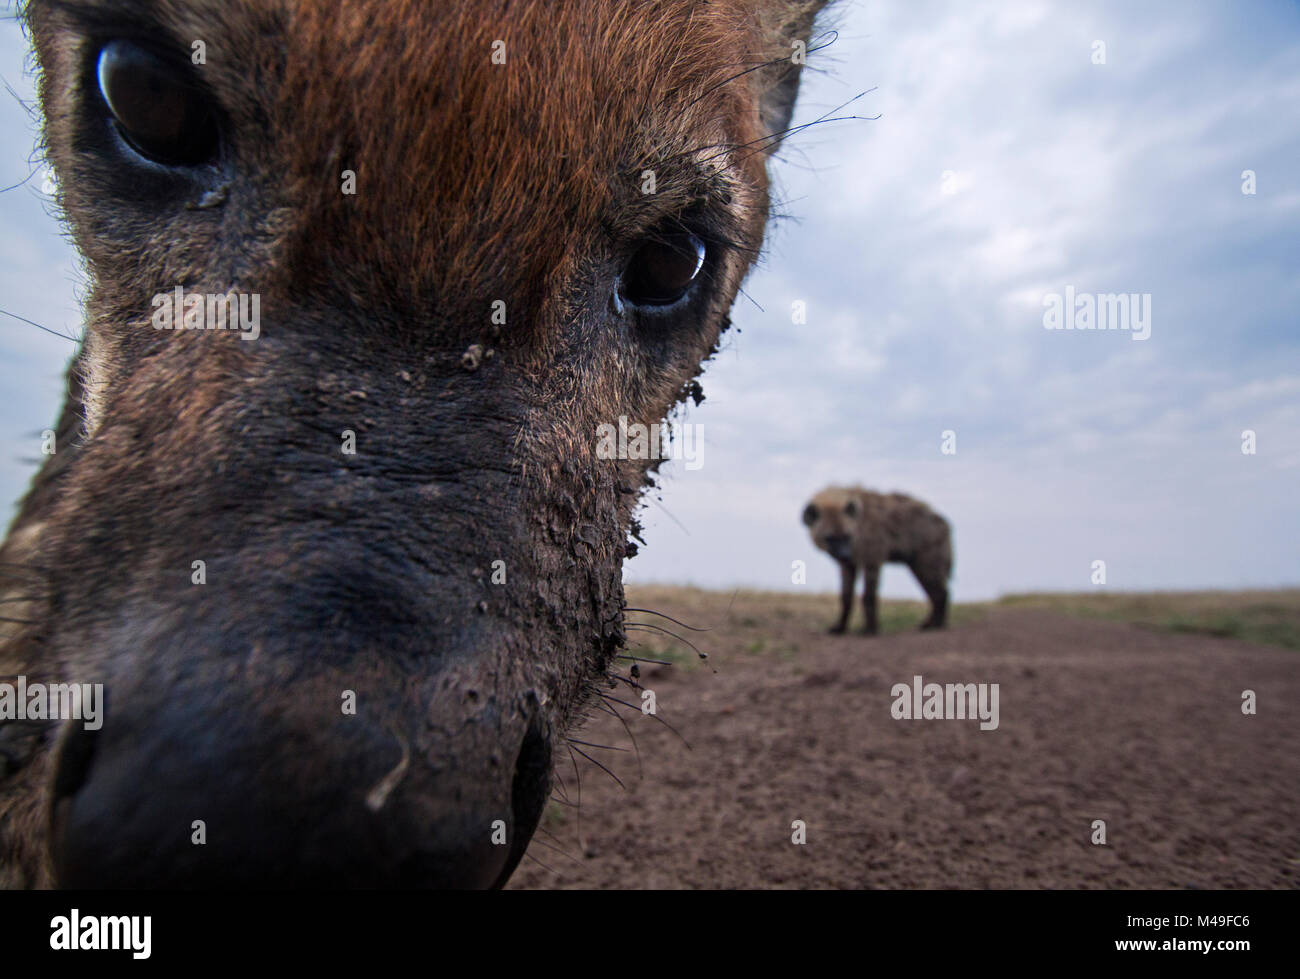 Tüpfelhyäne (Crocuta crocuta) anfahren Remote Camera mit Neugier, Weitwinkel Perspektive. Masai Mara National Reserve, Kenia. Stockfoto